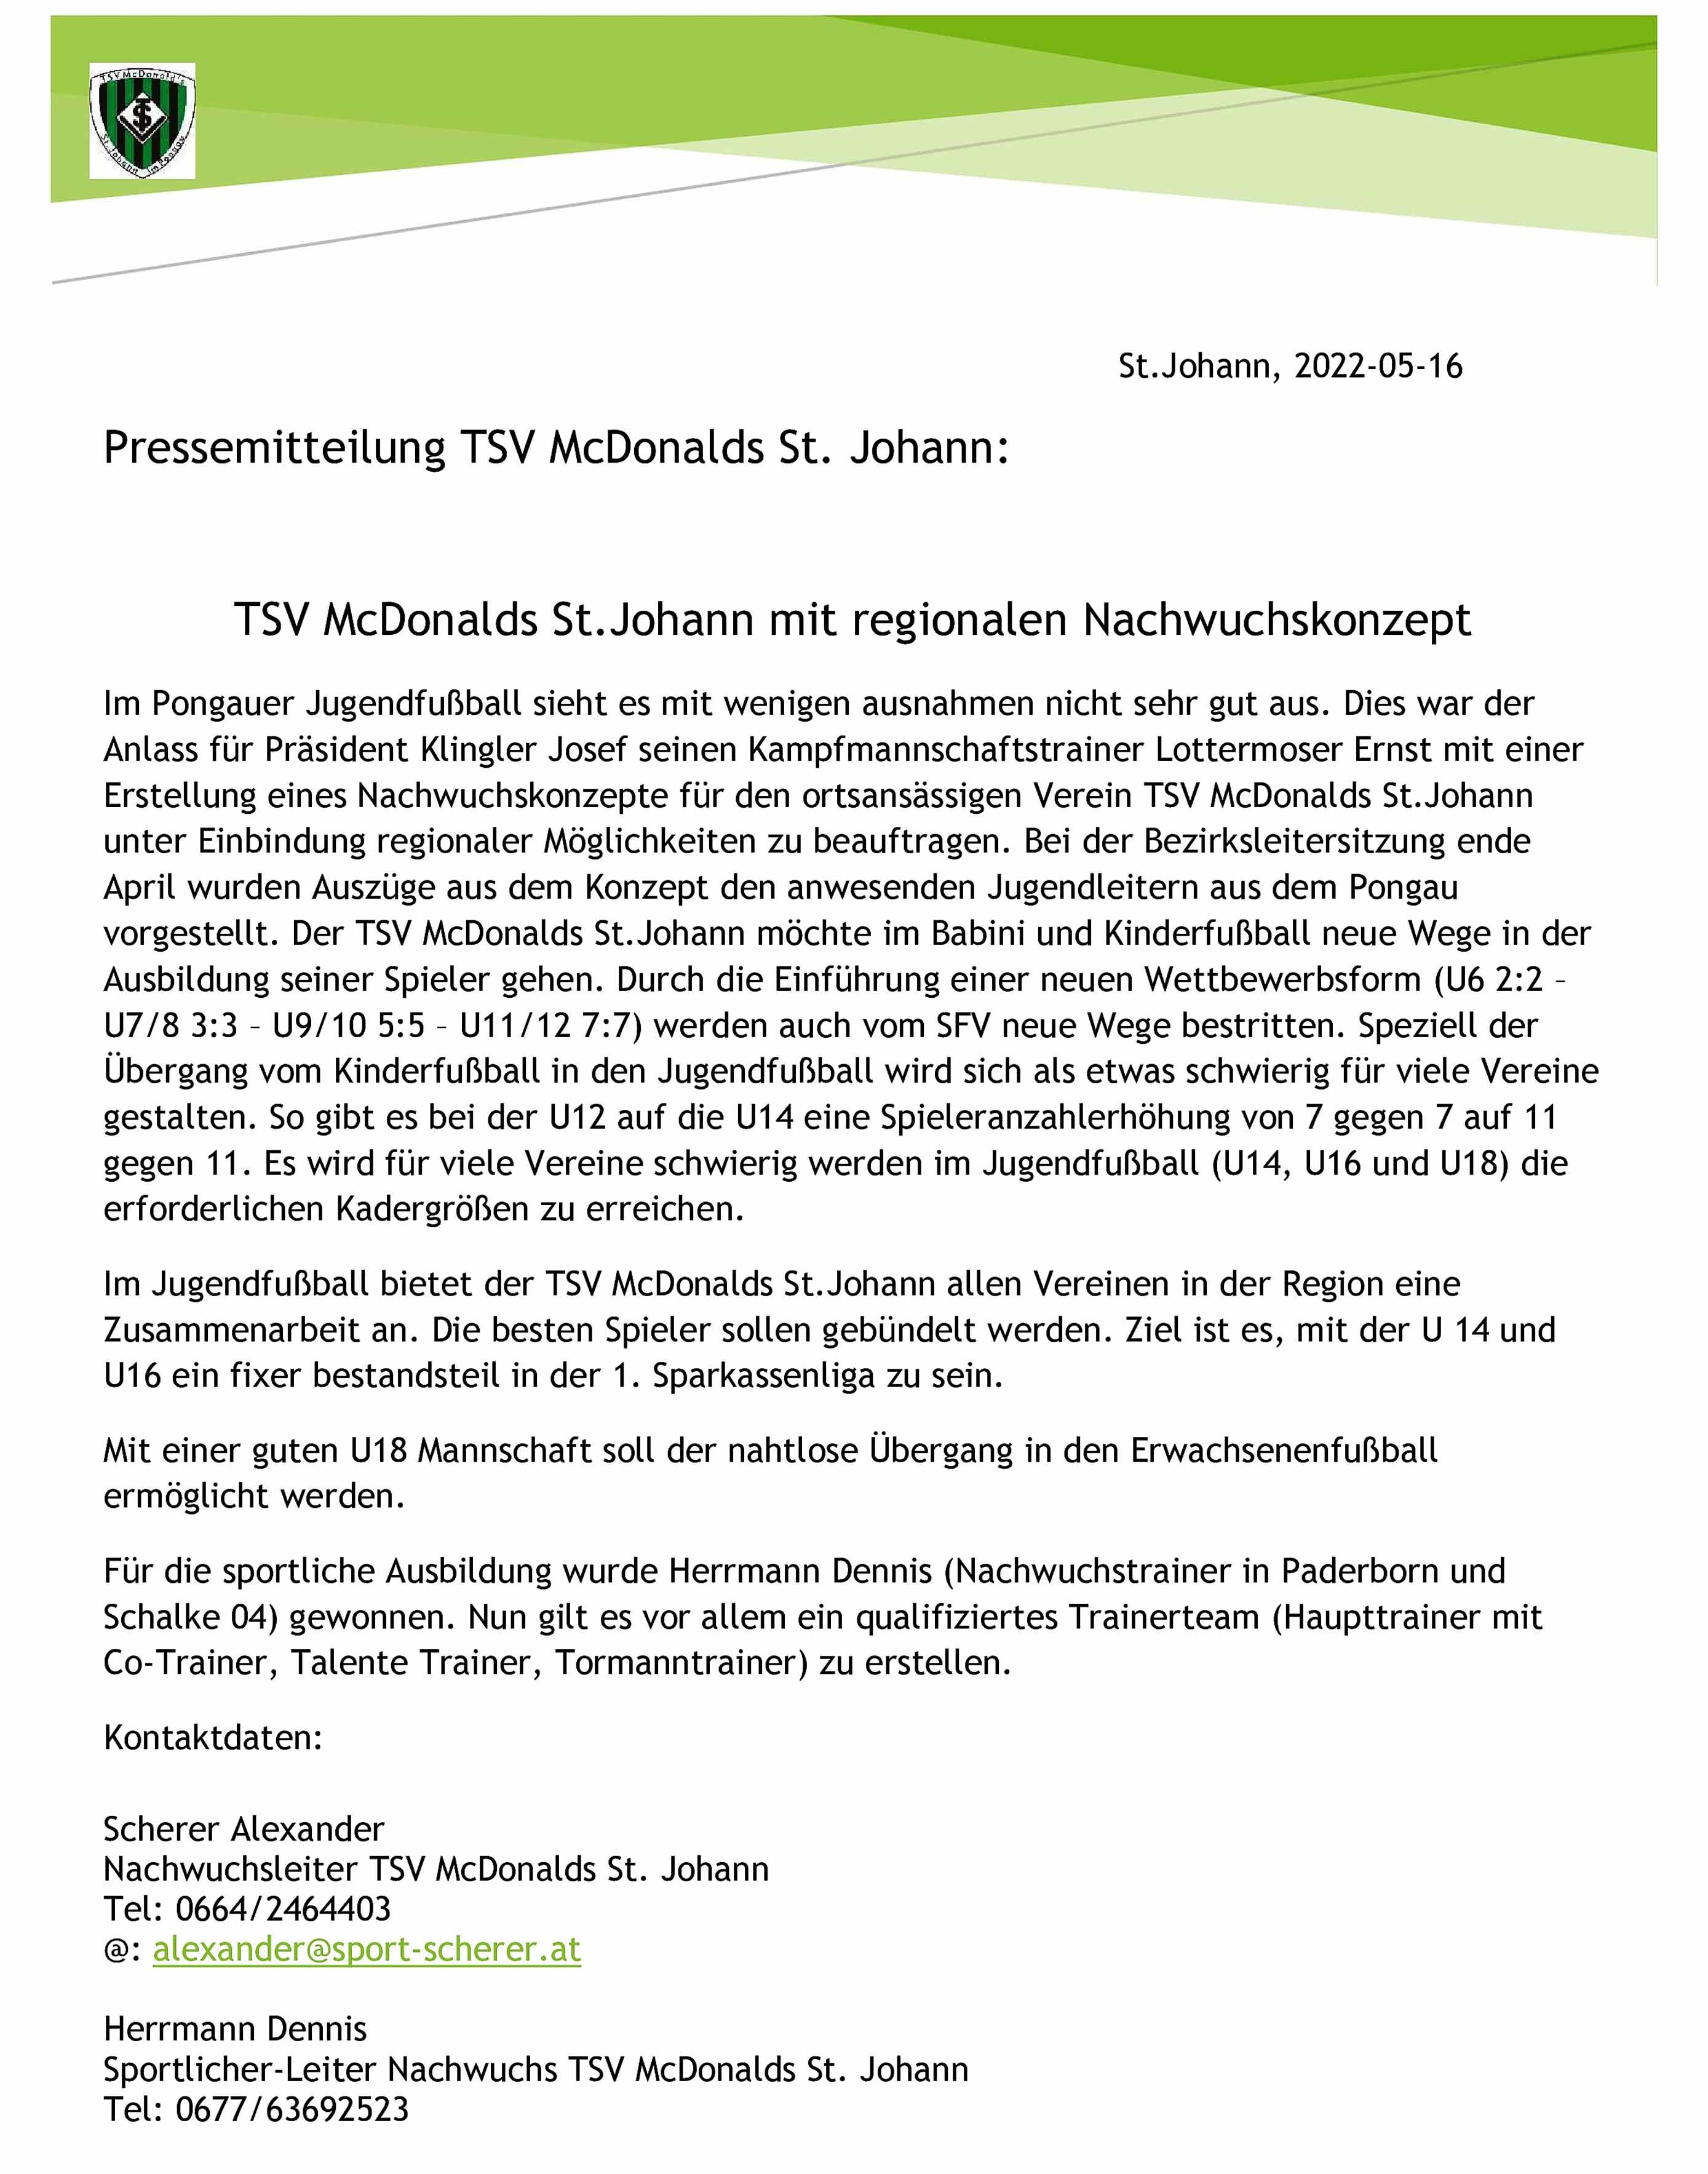 Pressemitteilung_TSV_McDonalds_St._Johann (1).jpg